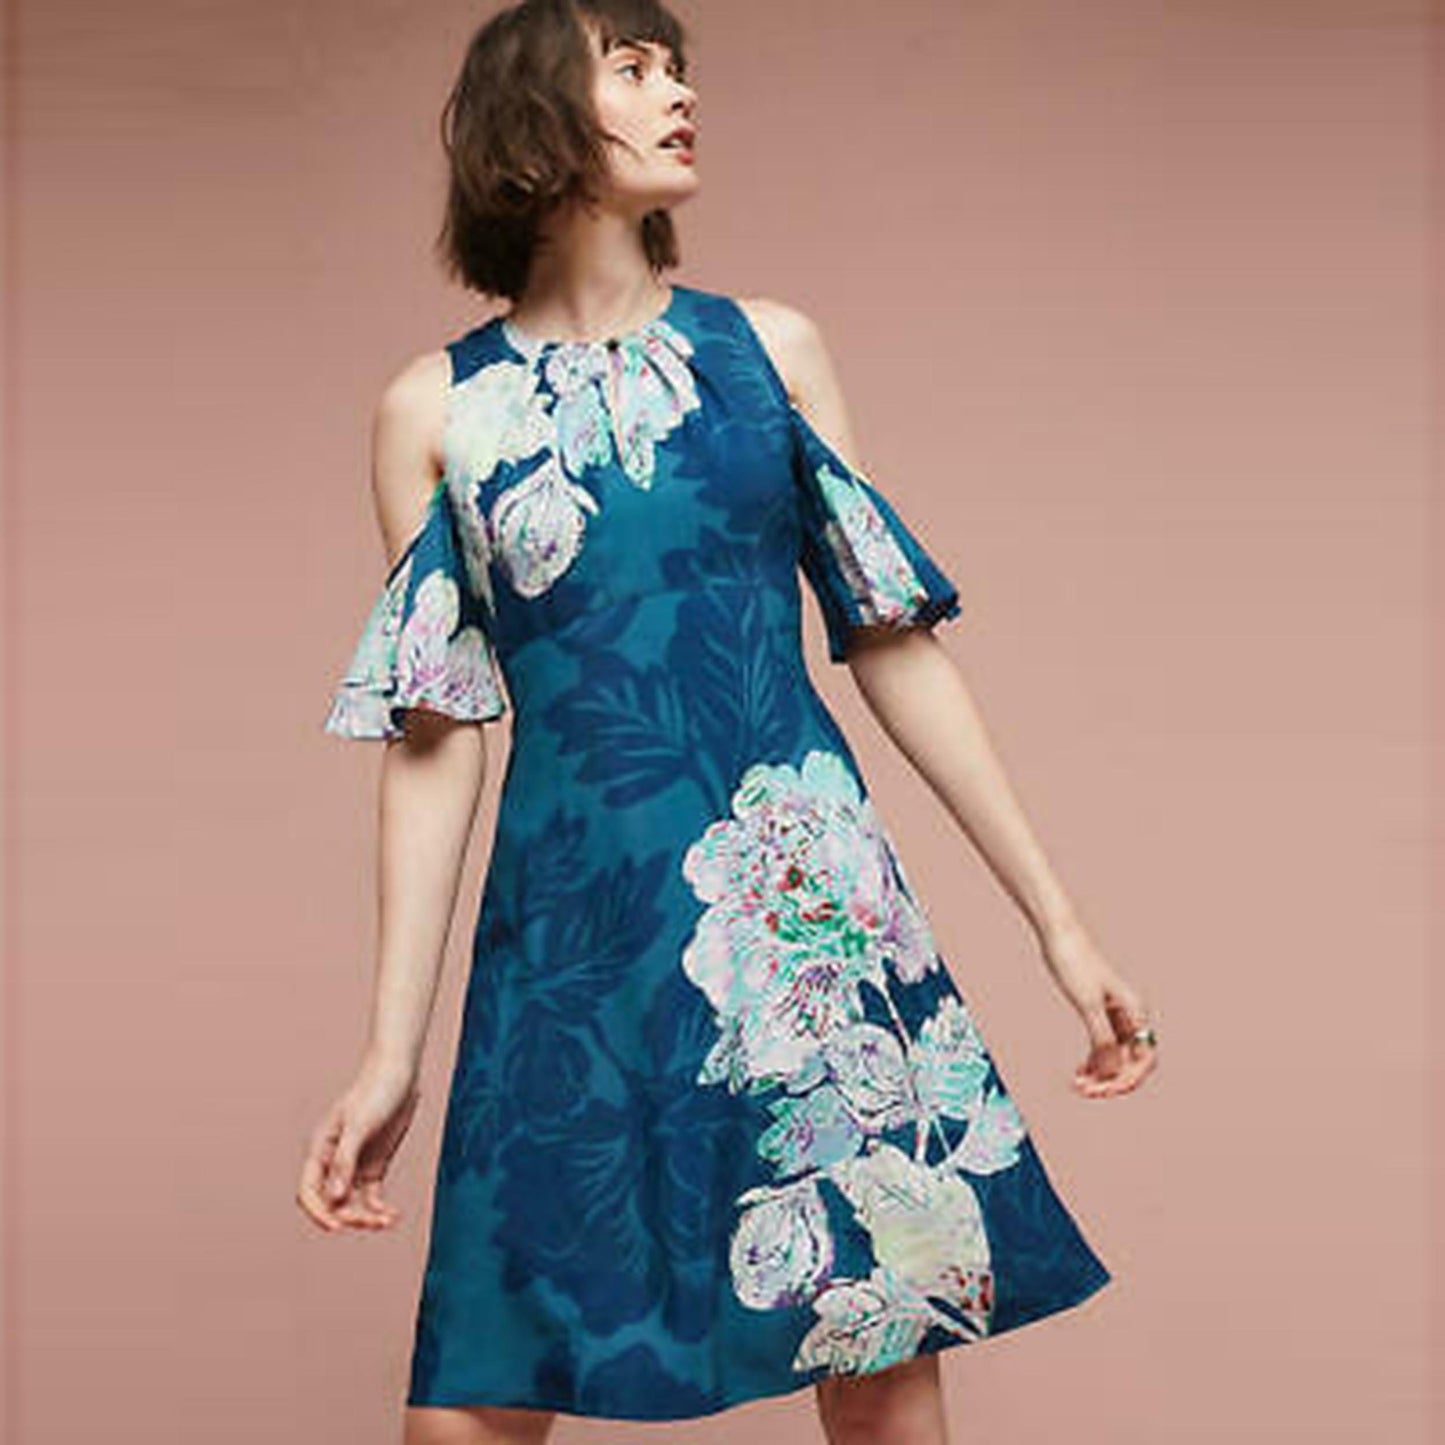 maeve elia cold shoulder floral midi dress - size 4